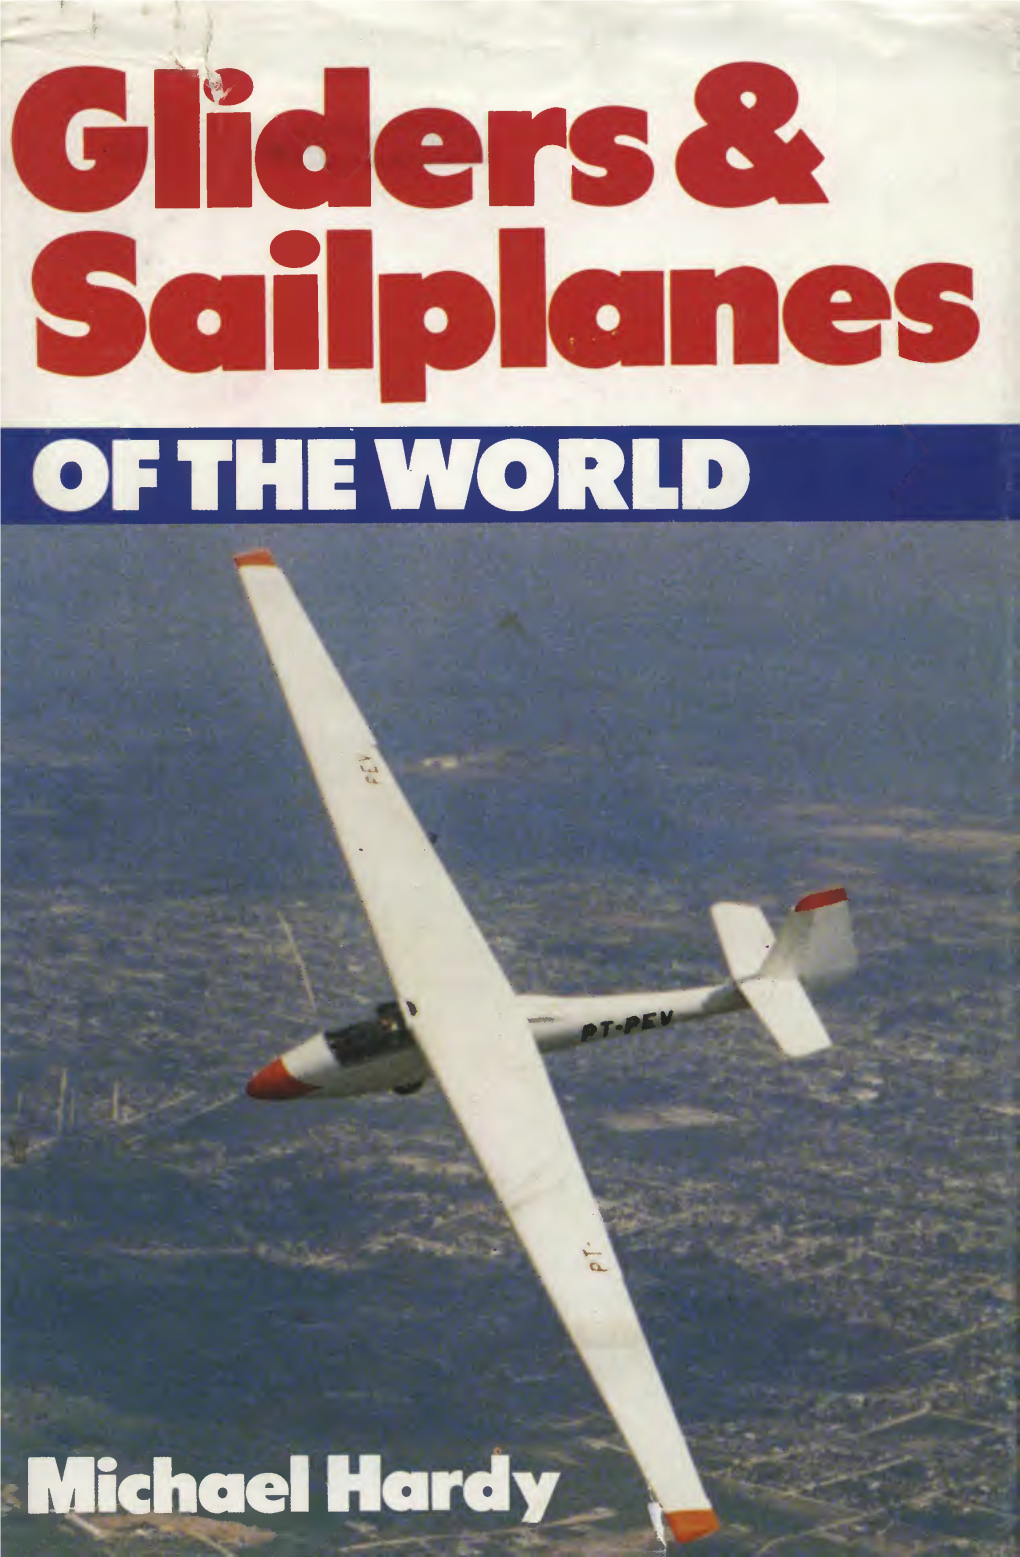 Gliders & Sailplanes of the World